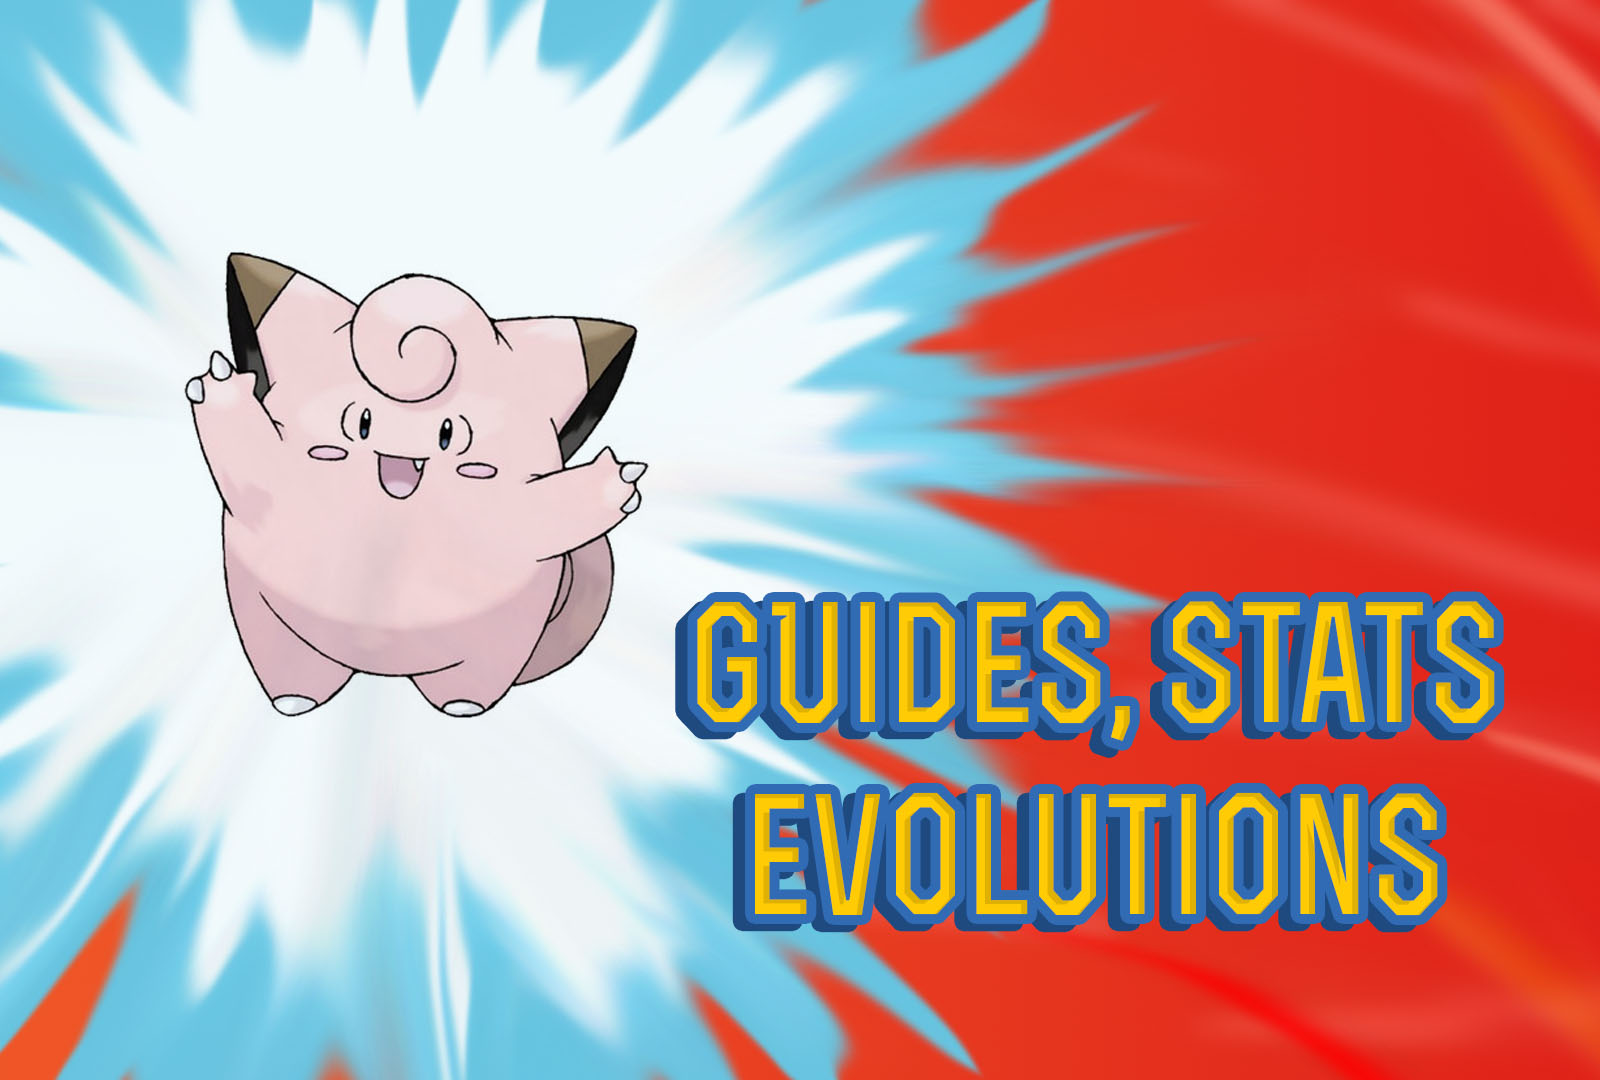 Pokemon Let's Go Clefairy Guide, Stats & Evolutions